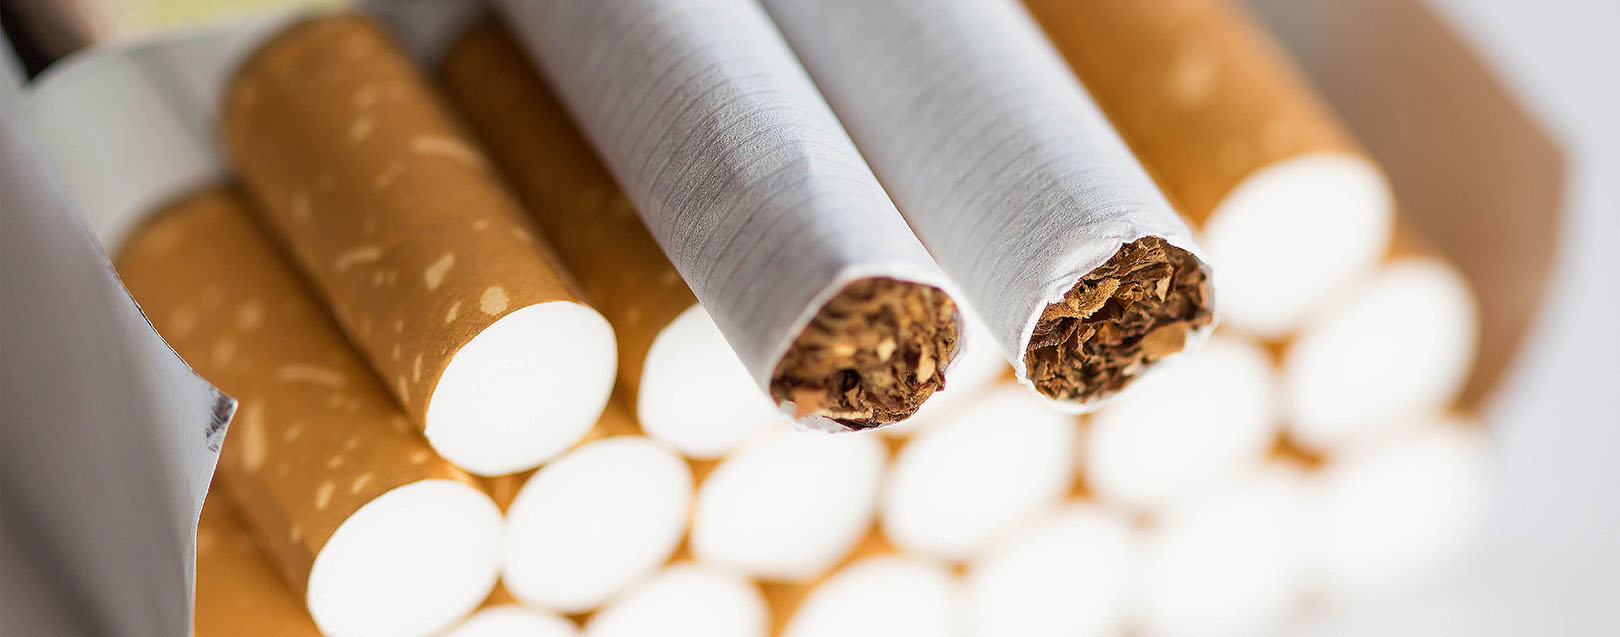 Cabinet may soon ban FDI in tobacco sector